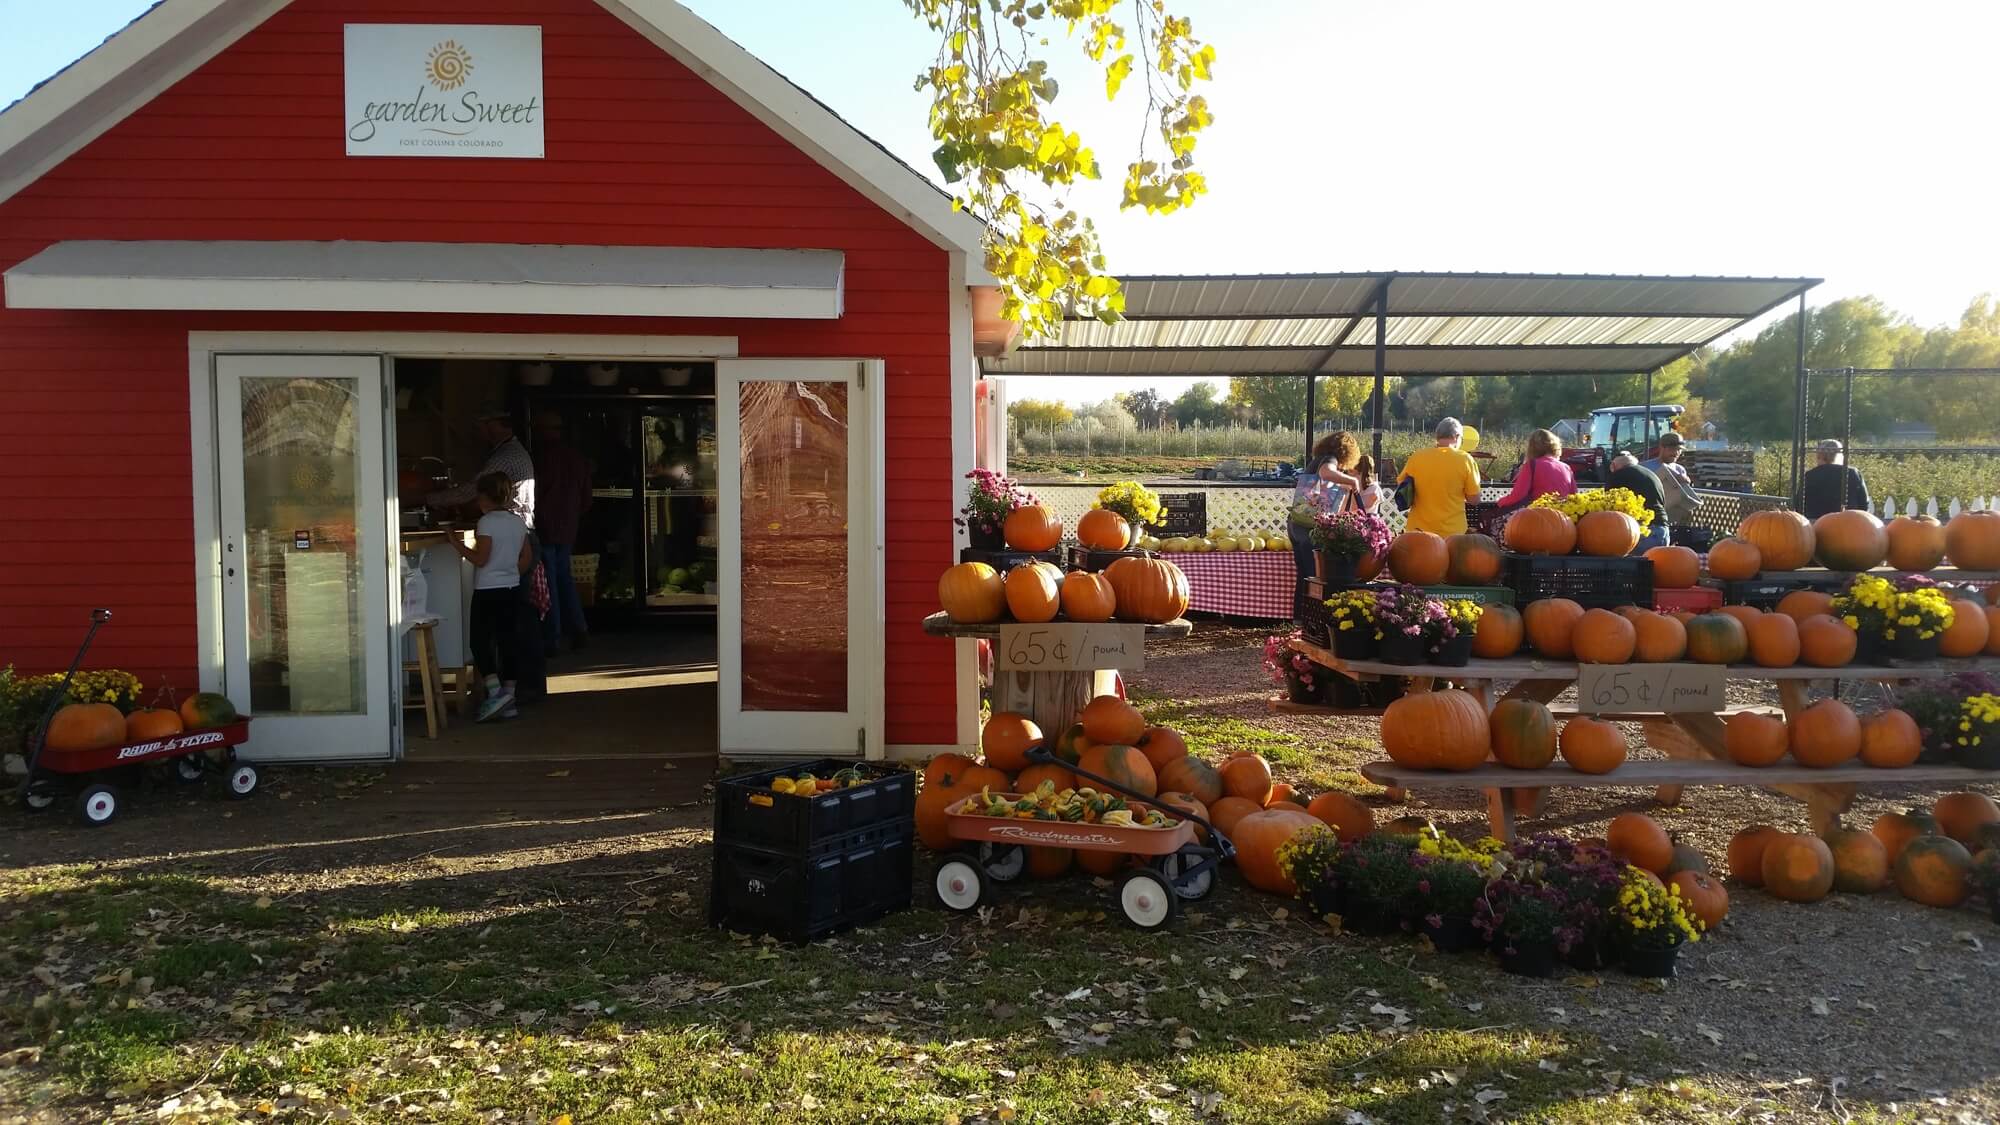 Garden Sweet Farm vegetable stand and pumpkins